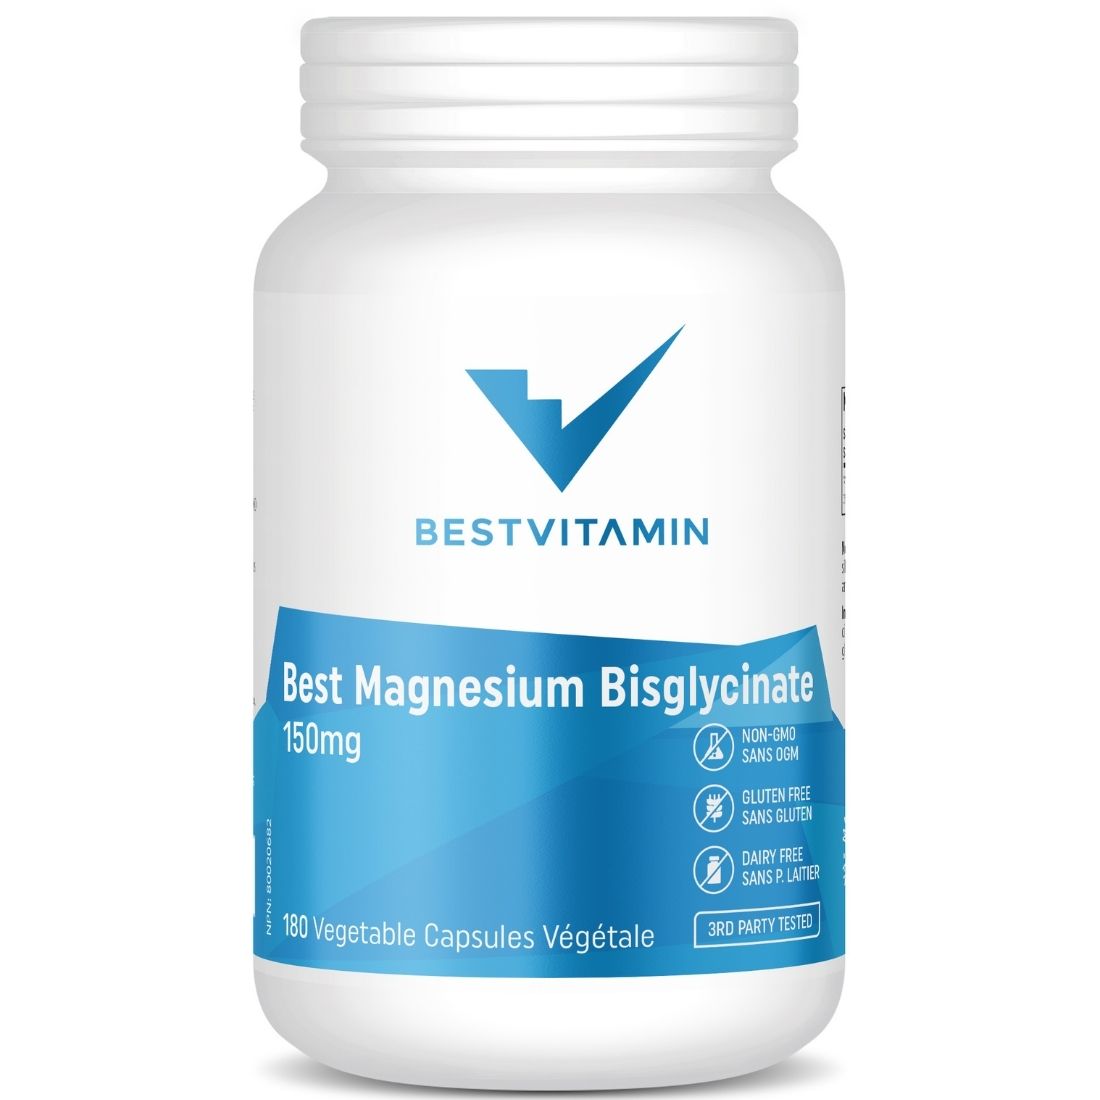 BestVitamin Best Magnesium Bisglycinate 150mg, Extra Gentle, Non-GMO